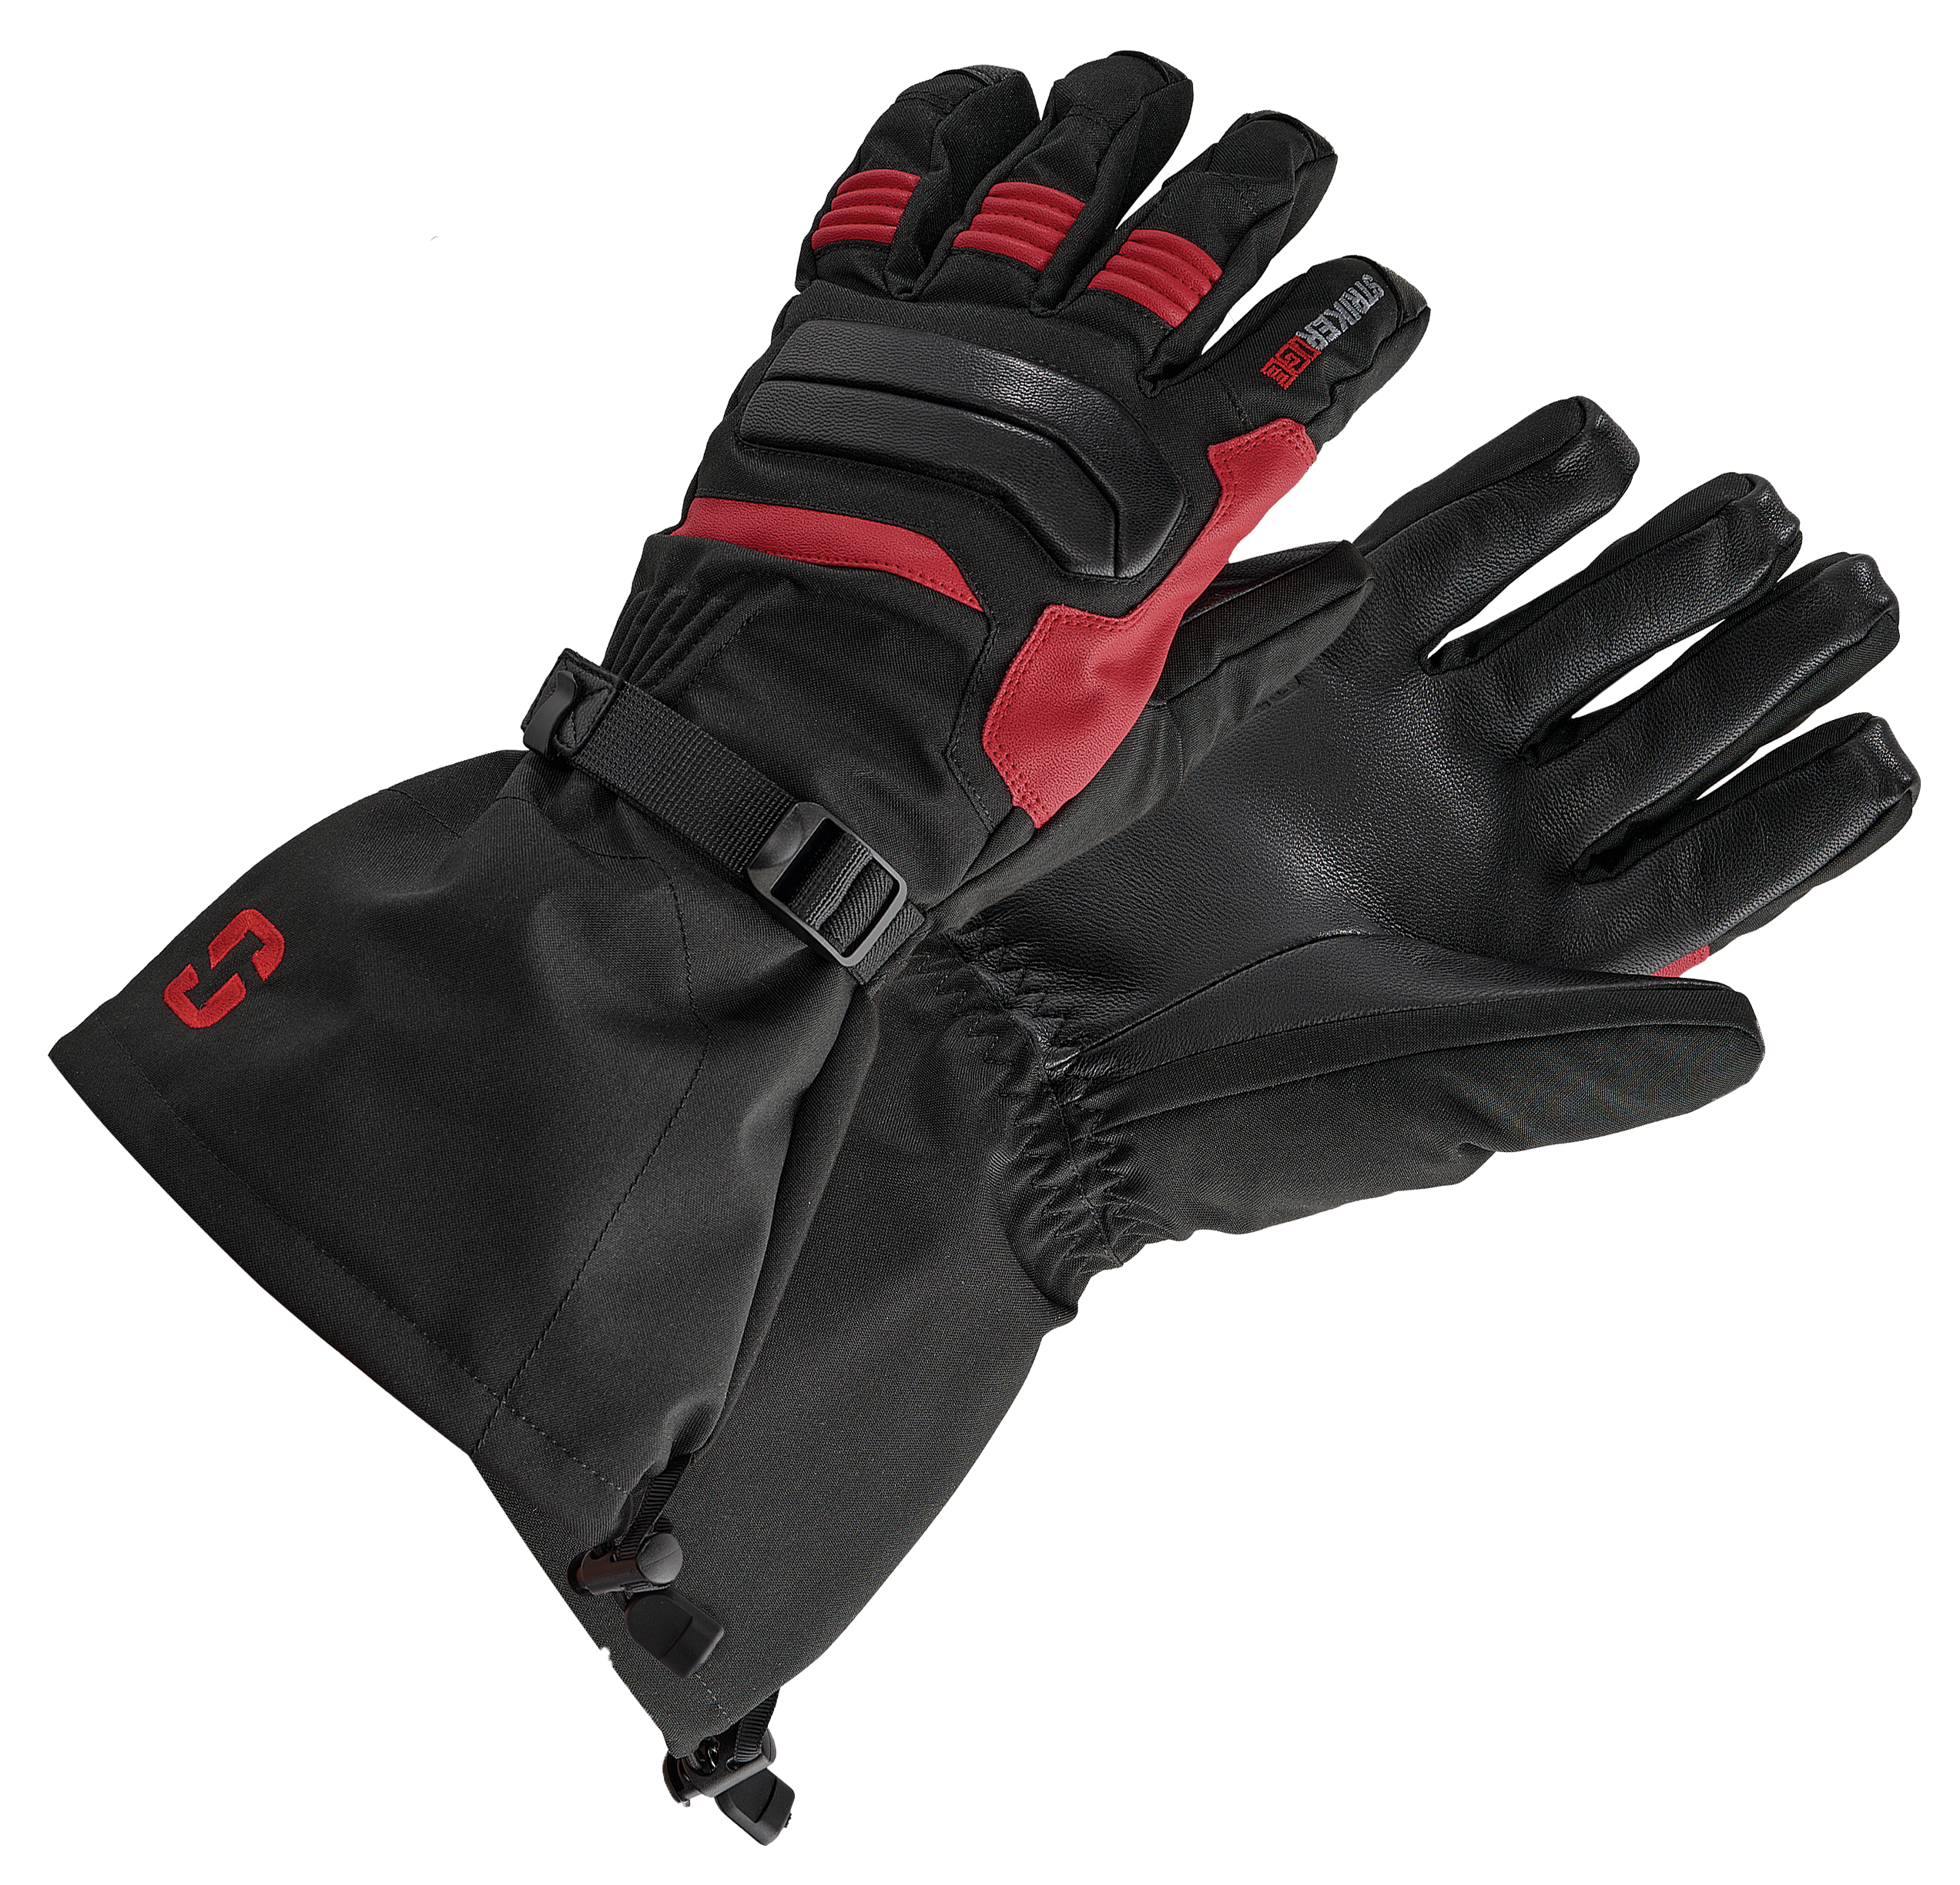 Striker Defender Ice Fishing Gloves, XL, Black/Red